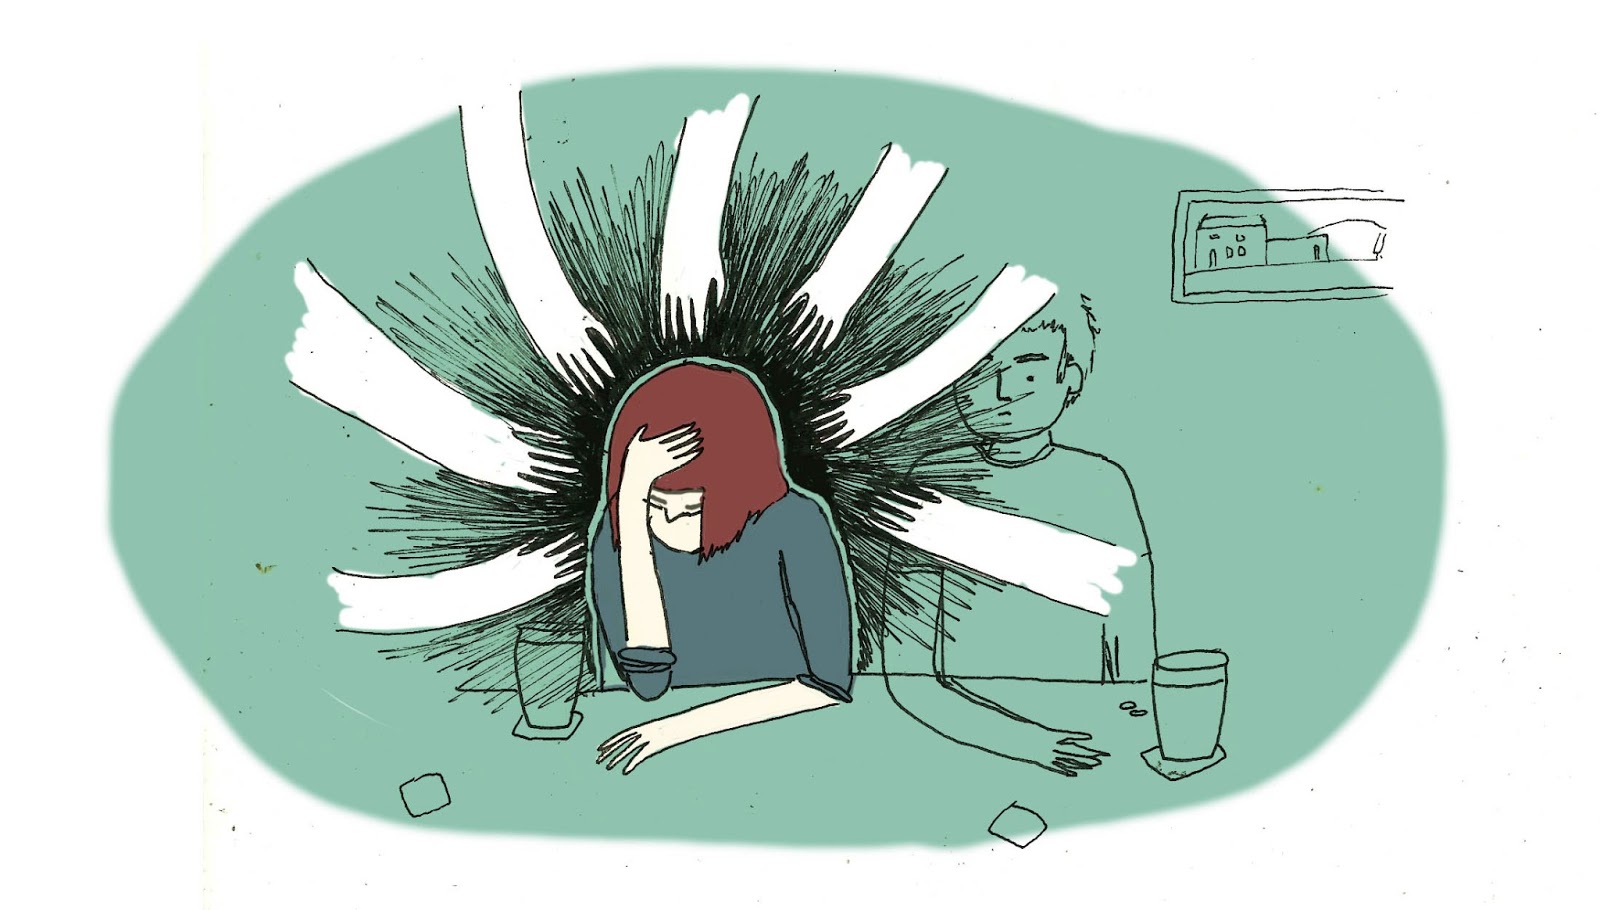 Jess Marshall Illustration: more mental health drawings